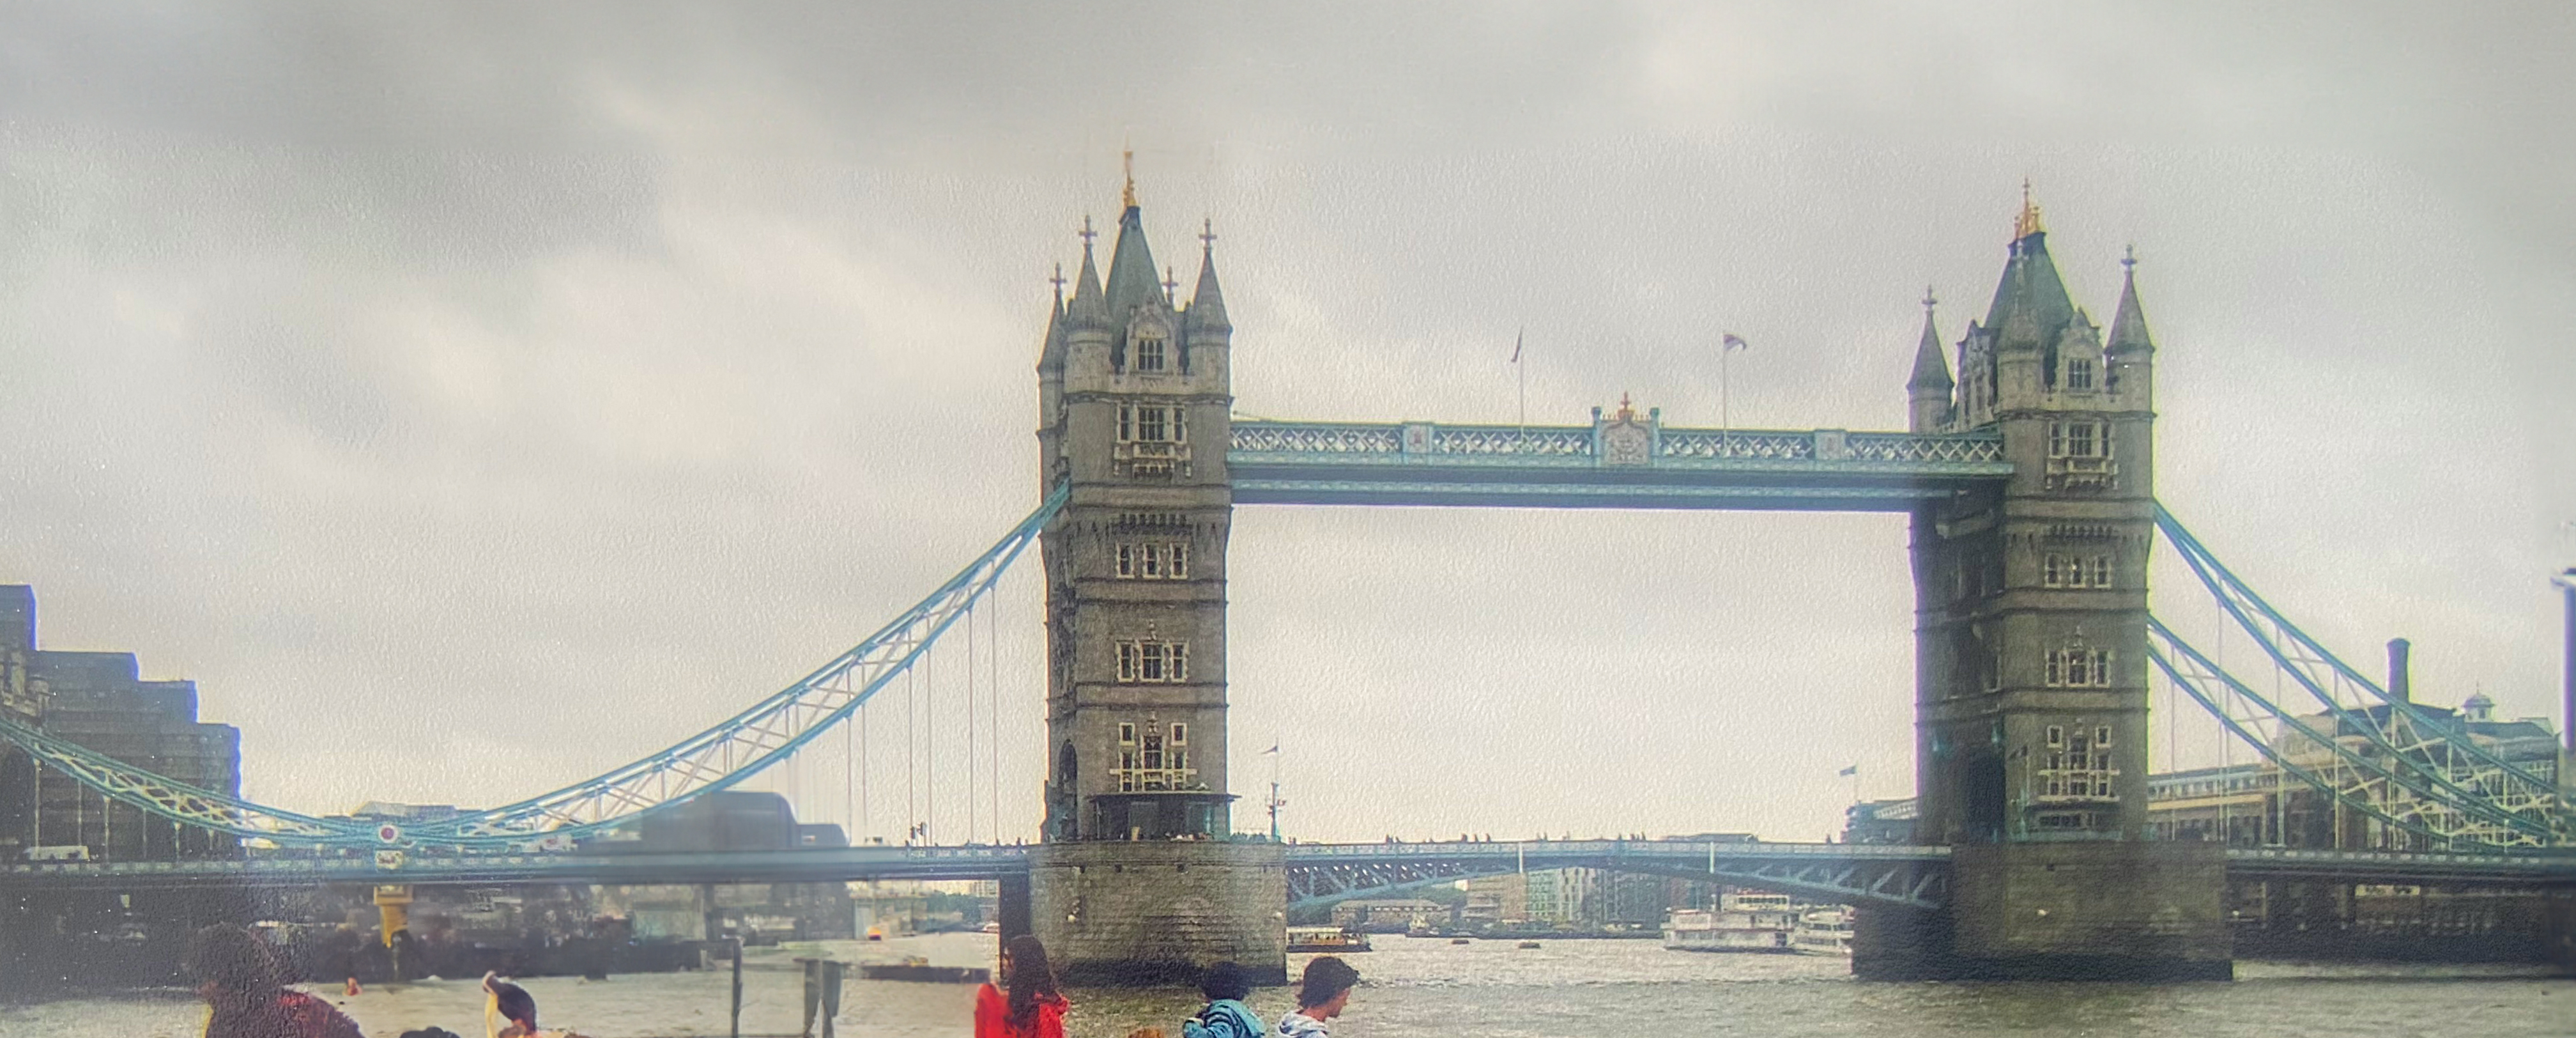 An image of London Bridge